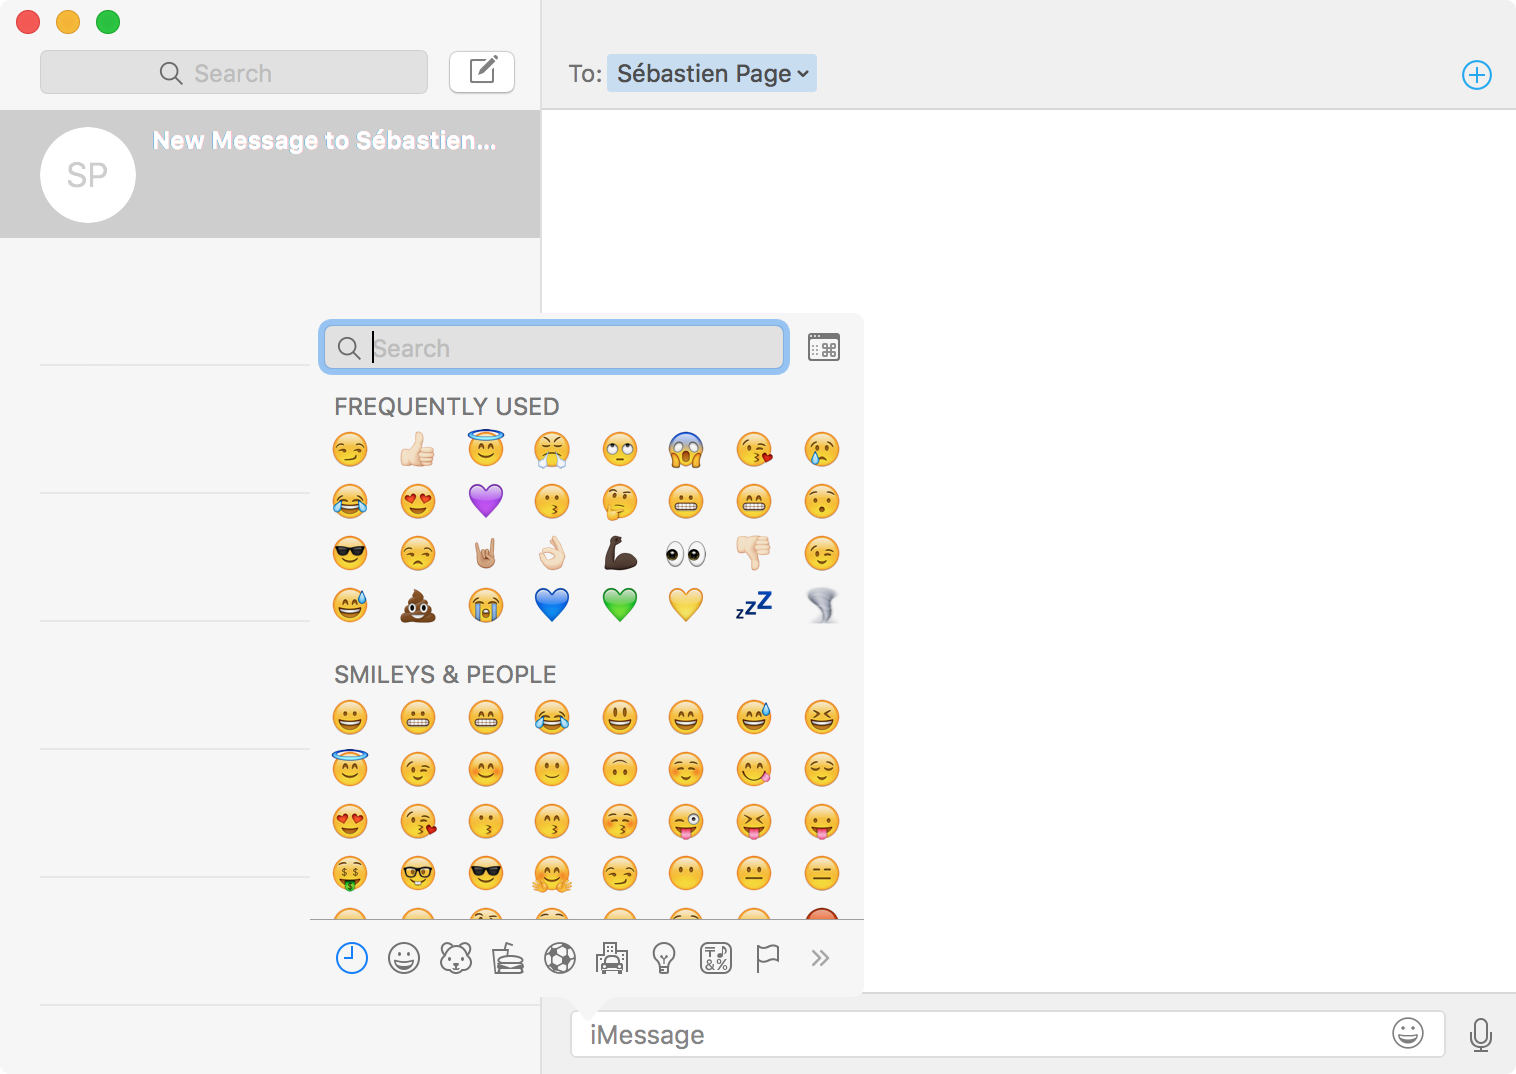 Download Emojis For Mac